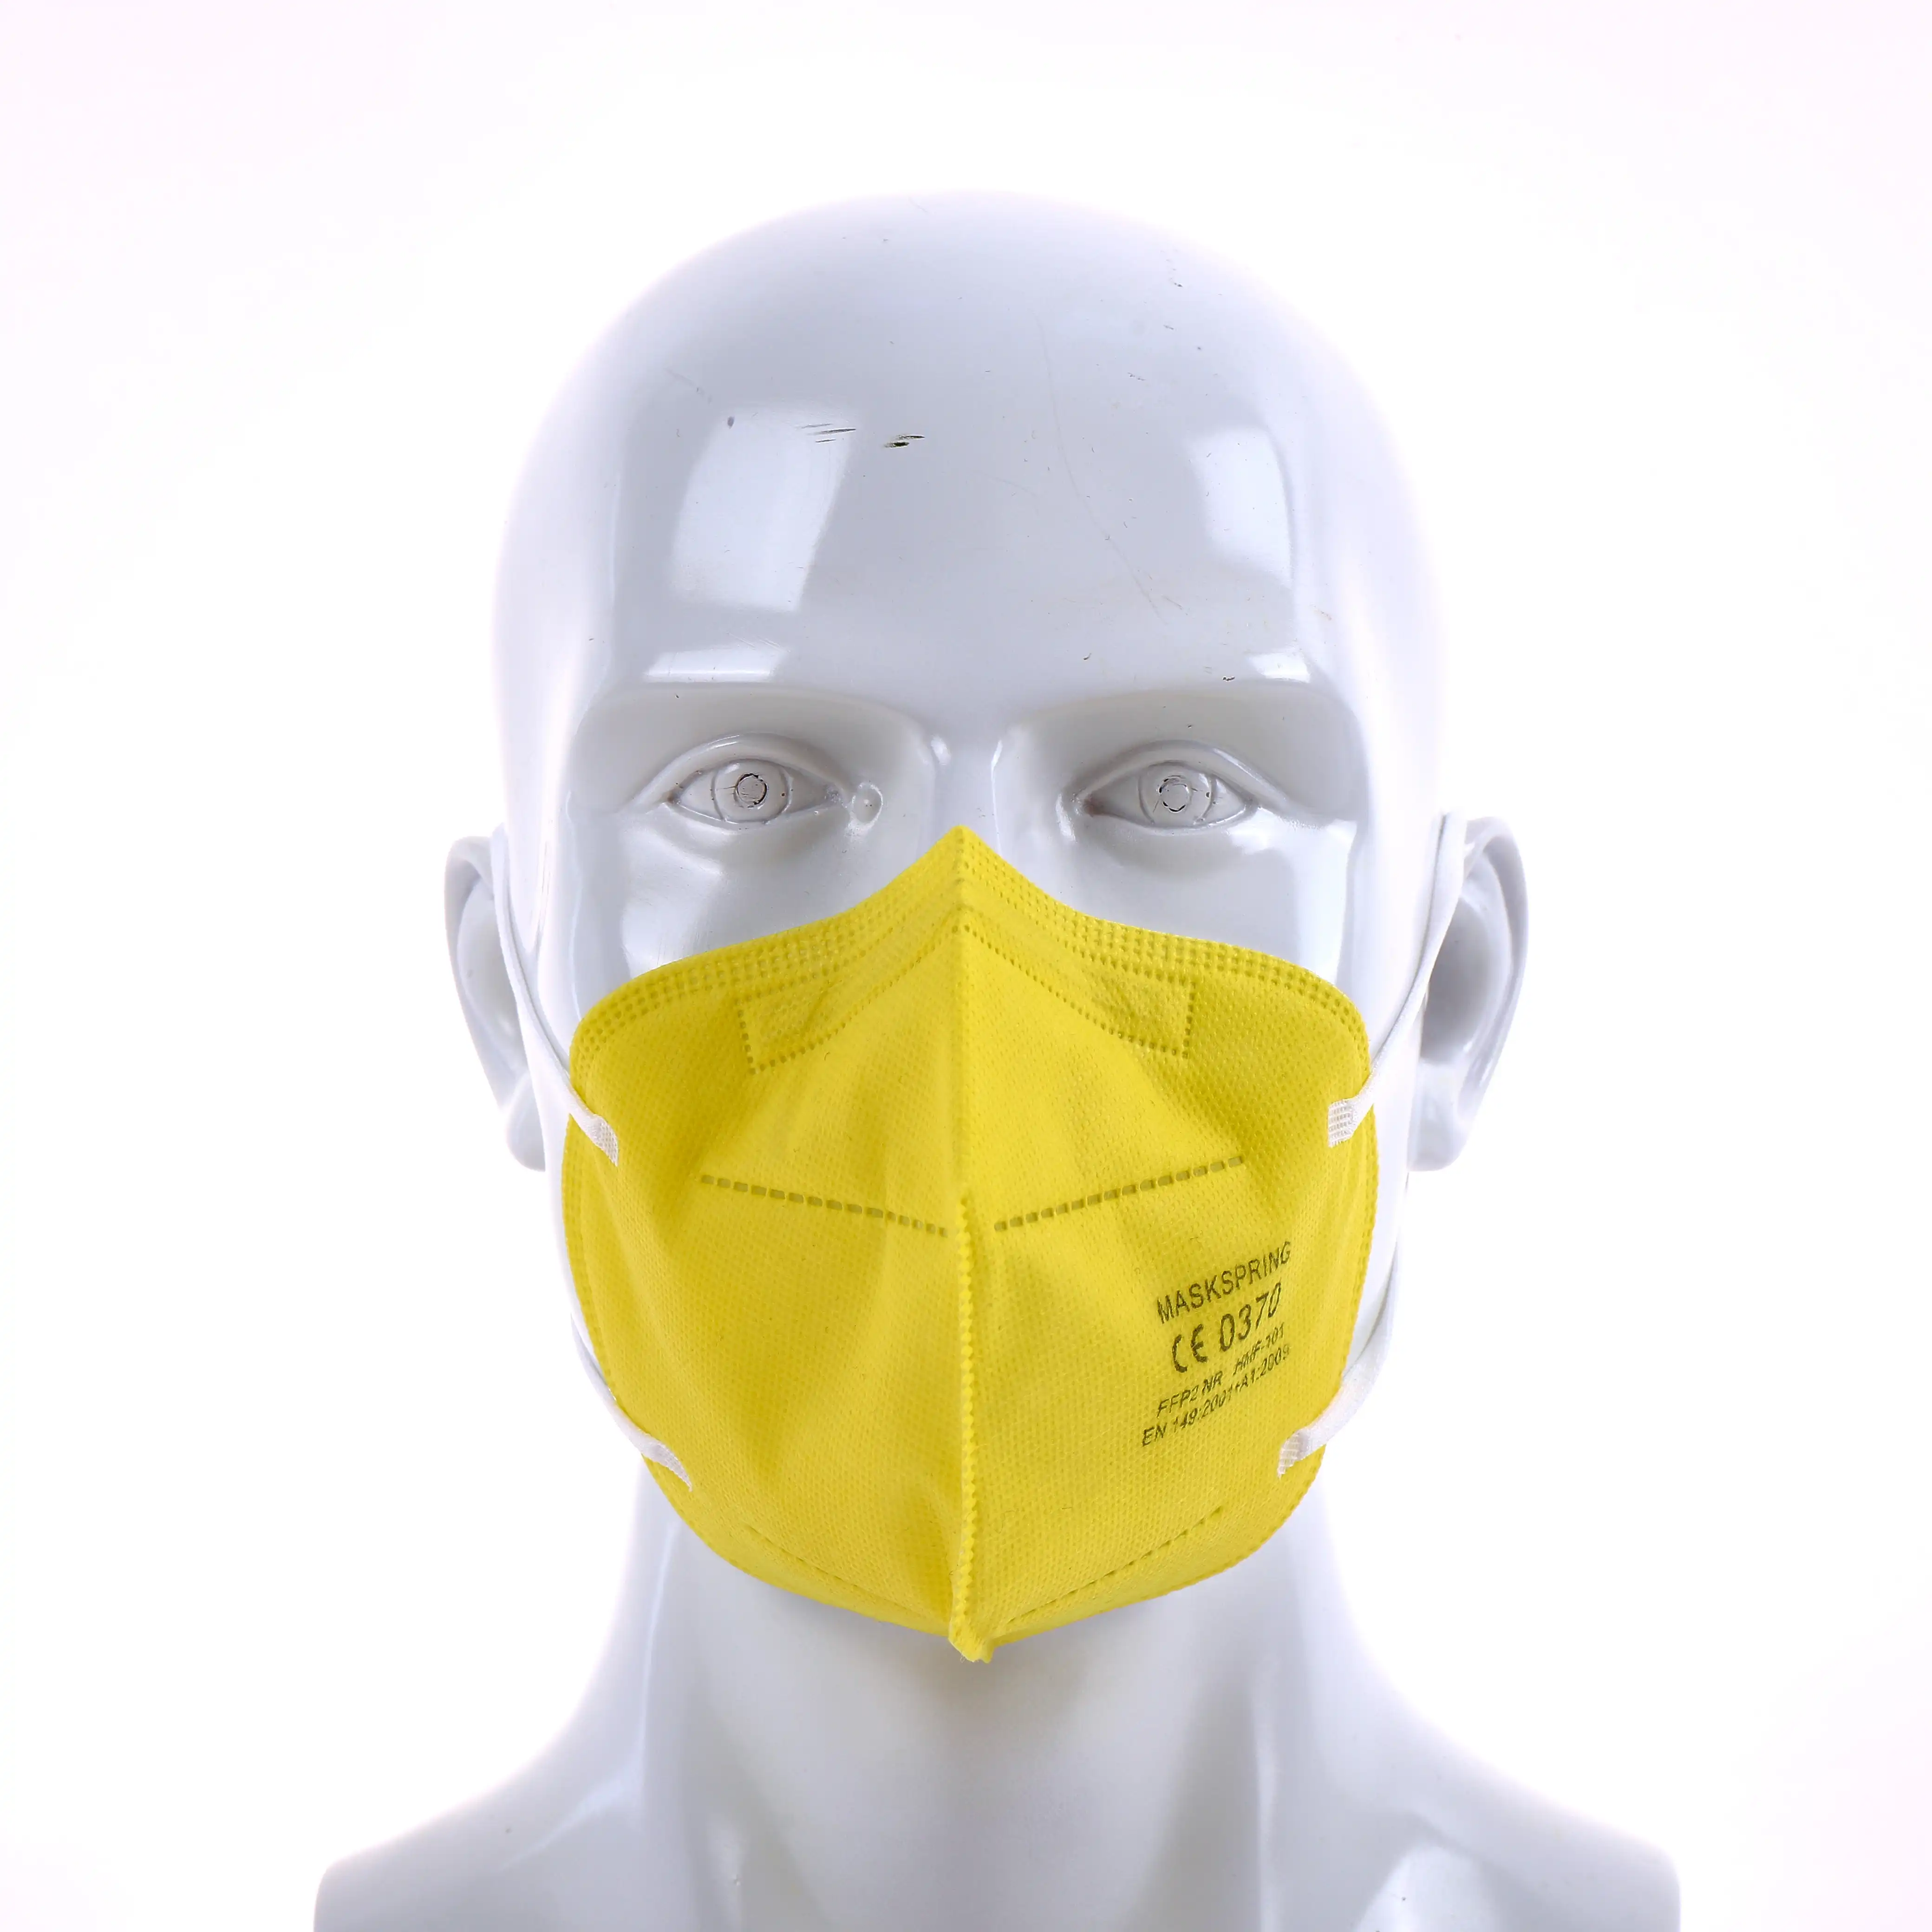 factory stock ffp2 mask herstell FFP2 CE masken atemschutzmask